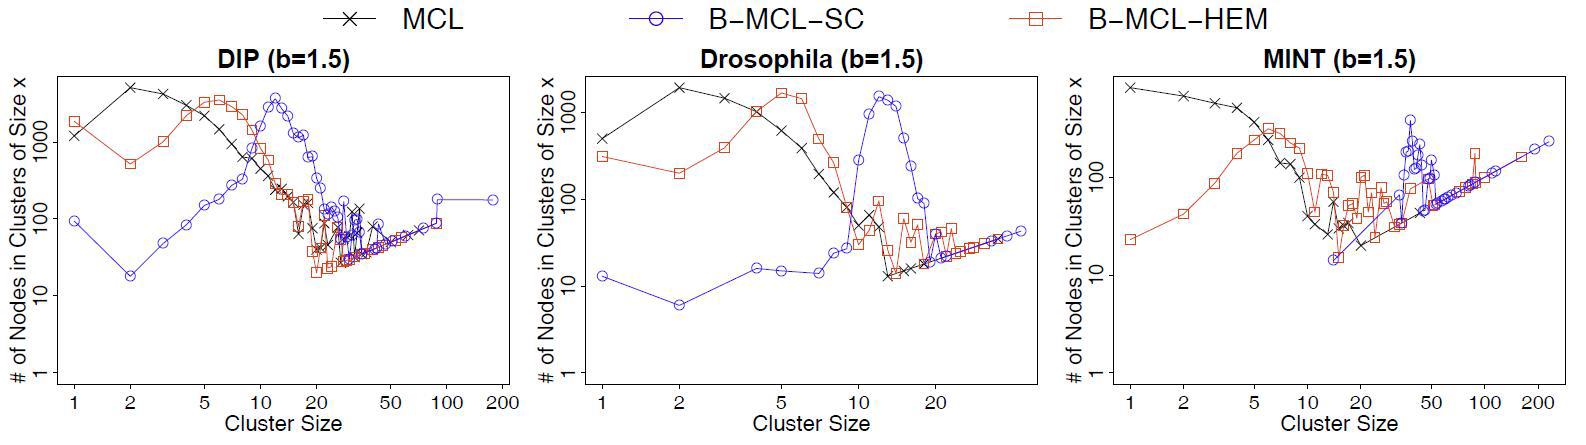 MCL, B-MCL-SC, B-MCL-HEM 세 가지 기법에 대한 클러스터 사이즈 별 노드 수 비교. B-MCL에 대한 Coarsening 깊이는 3을 사용했다.